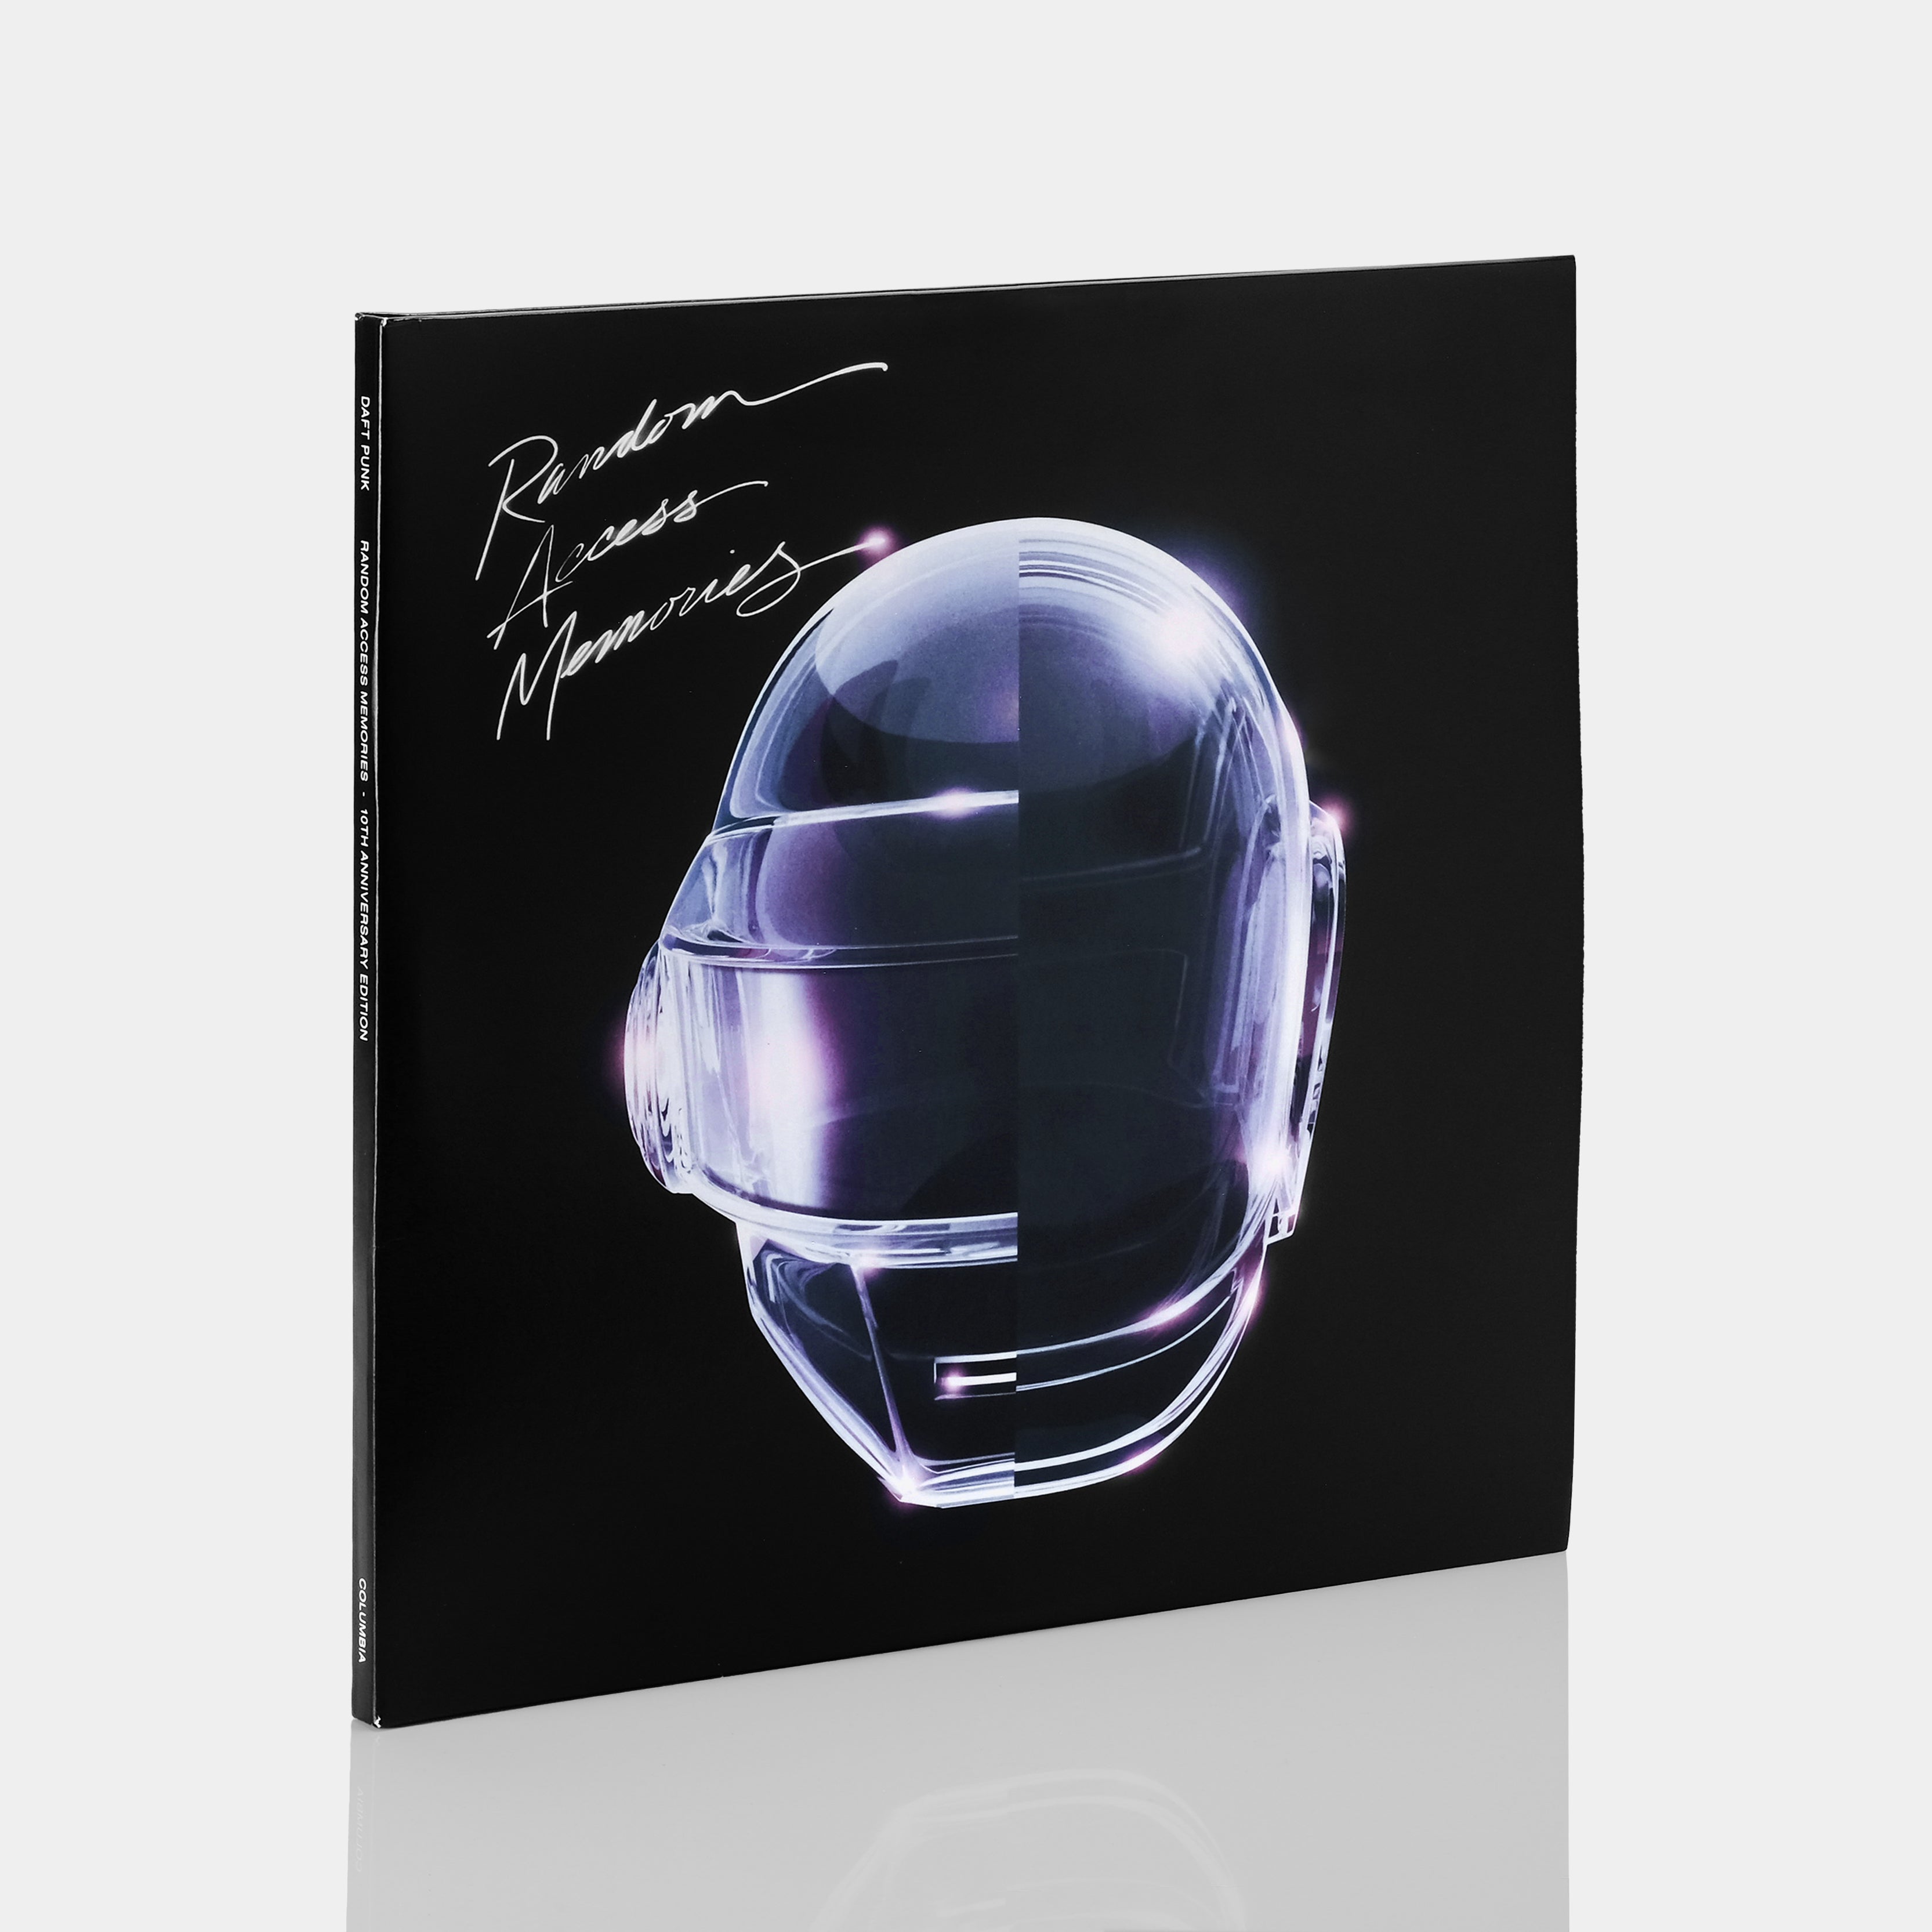 Daft Punk - Random Access Memories (10th Anniversary Edition) 3xLP Vinyl Record